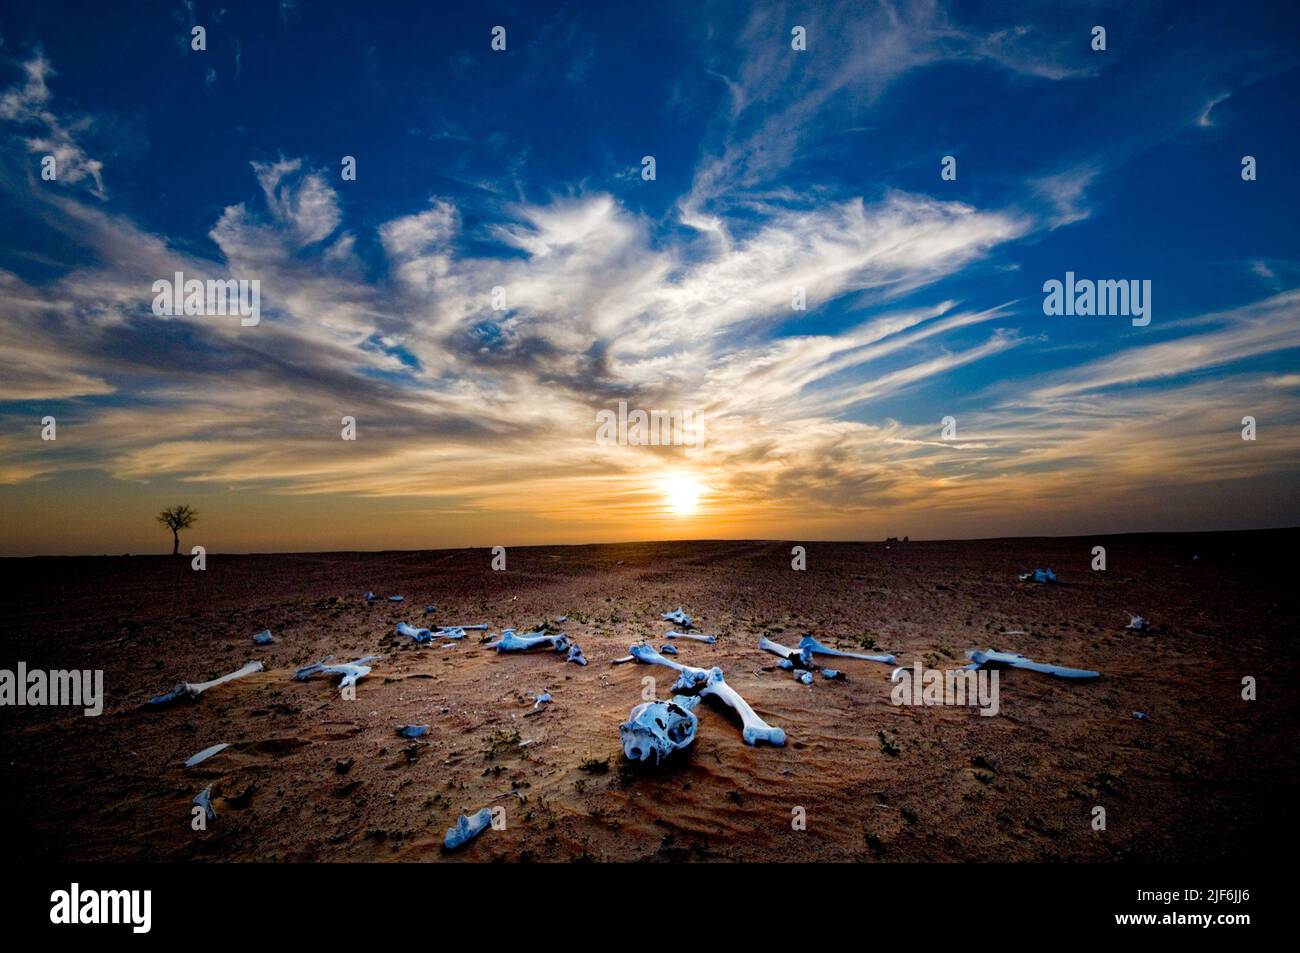 Dramatic desert landscape with whitewashed bones of a death animal at sunset Stock Photo